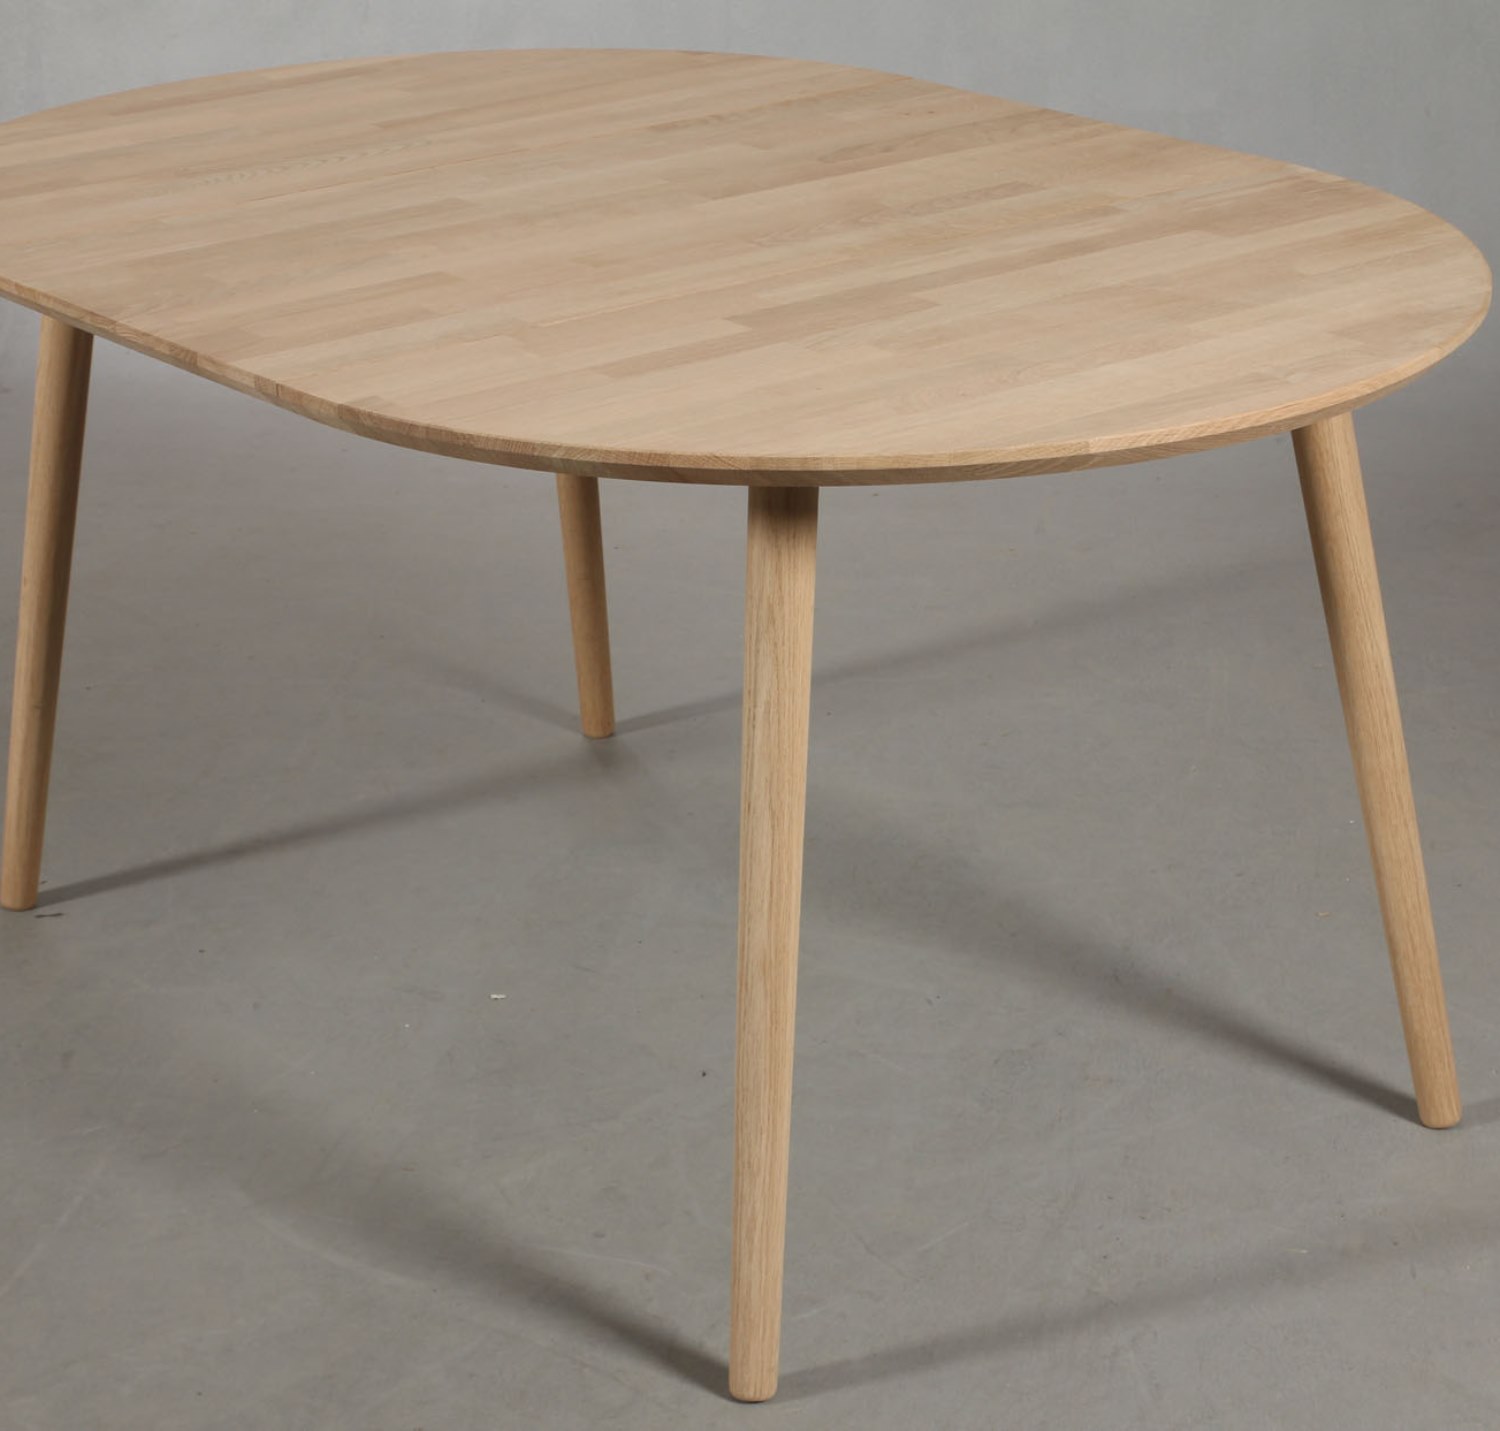 Lumber - rundt spisebord 100 cm., 1 tillægsplade, massiv eg - Spiseborde - Zity1.dk